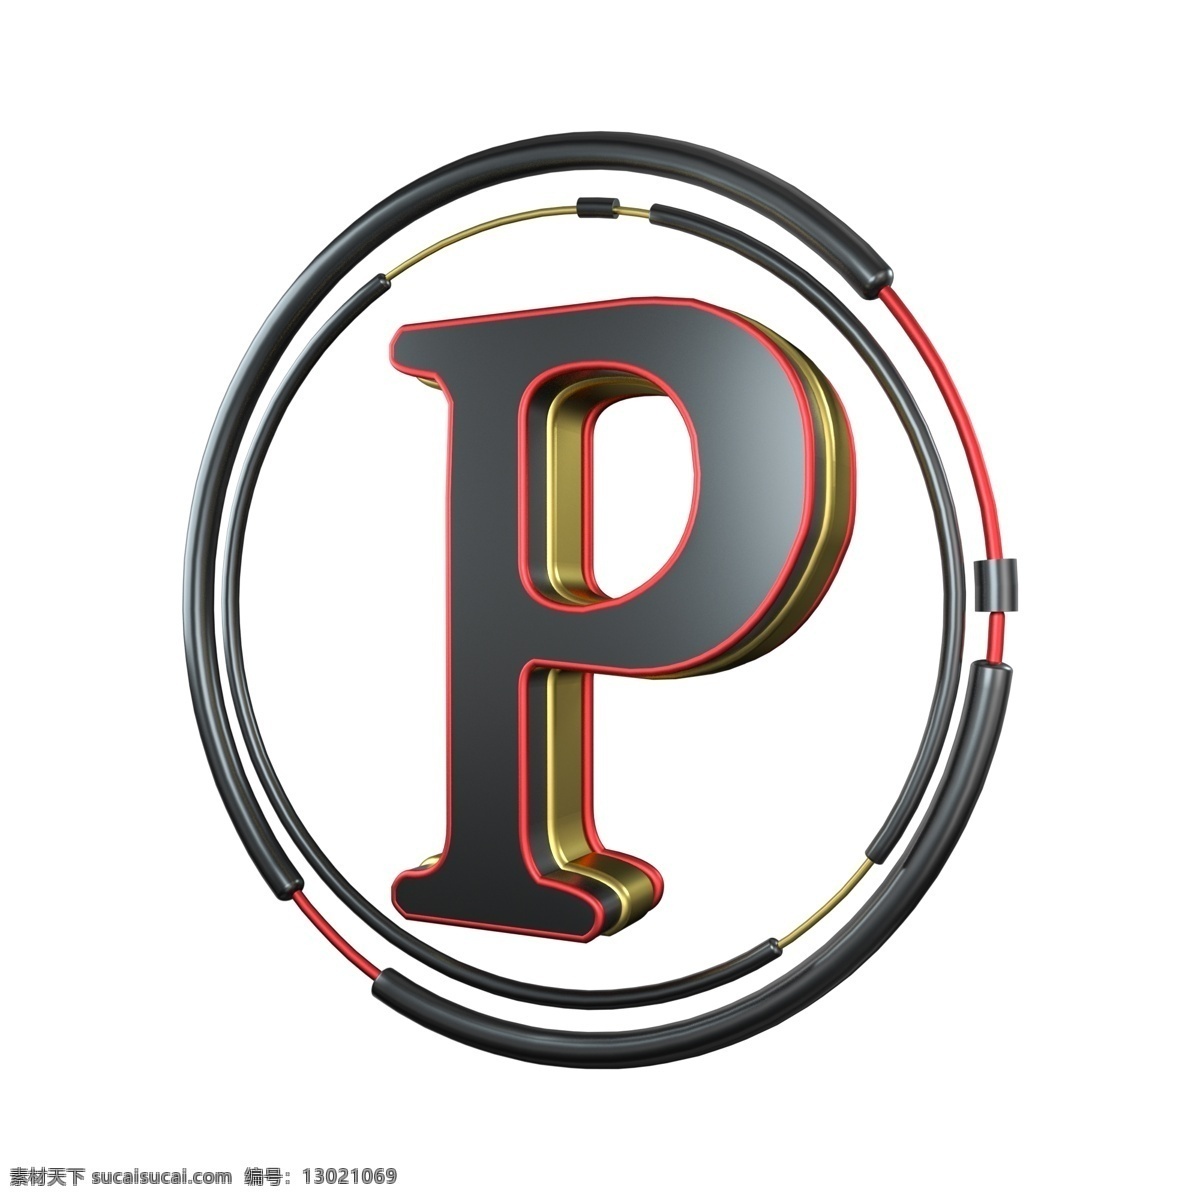 c4d 炫 酷 黑红 金 立体 字母 p 装饰 3d 炫酷 黑色 红色 金色 金属质感 平面海报配图 透明图层 字母p